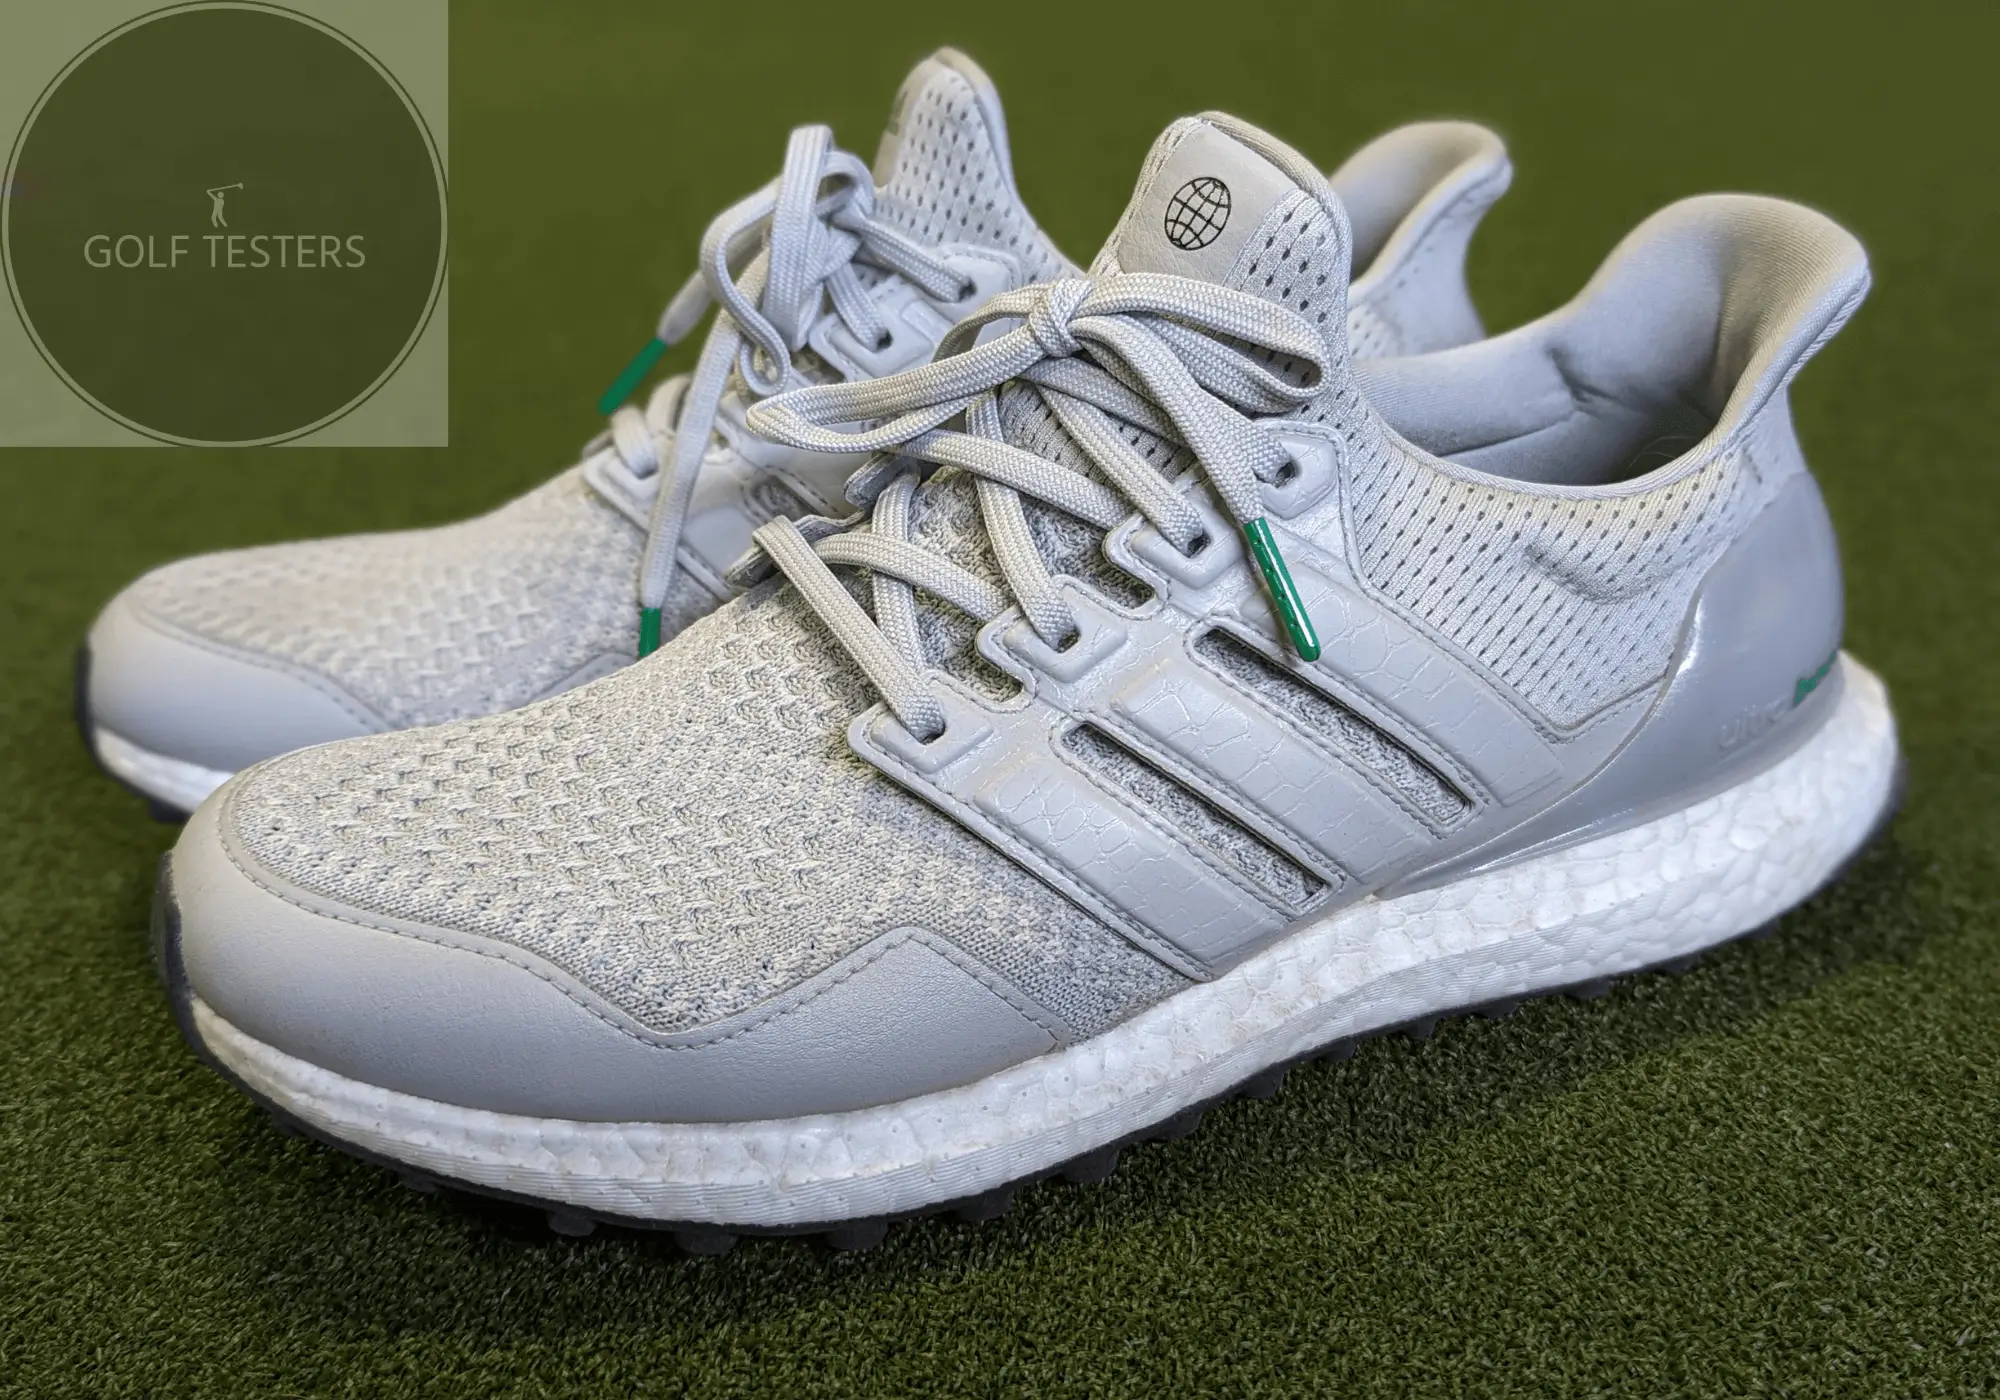 Adidas Ultraboost Golf Shoe